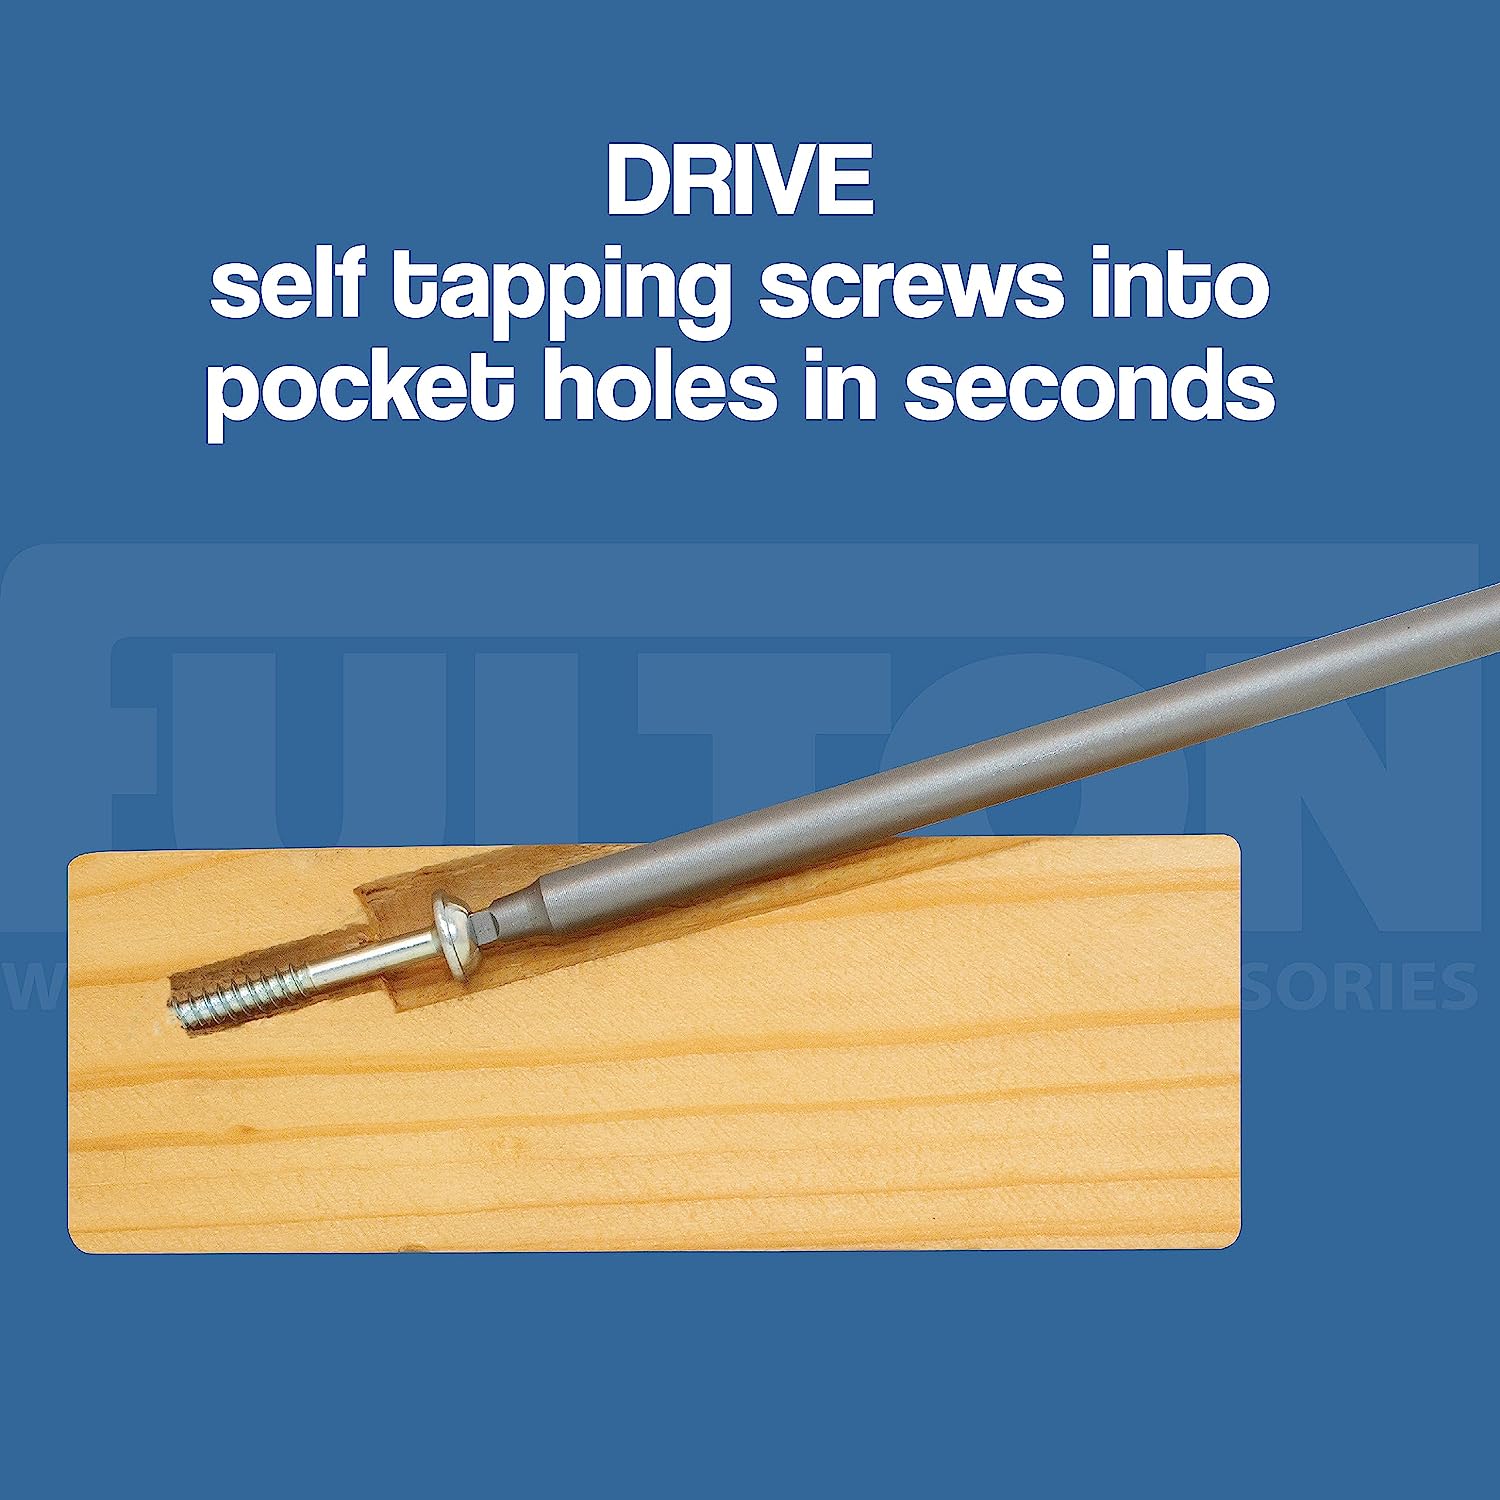 Fulton Zinc Self-Tapping Pocket Hole Screws - 1000 Pk - 500 Coarse Threads & 500 Fine Threads